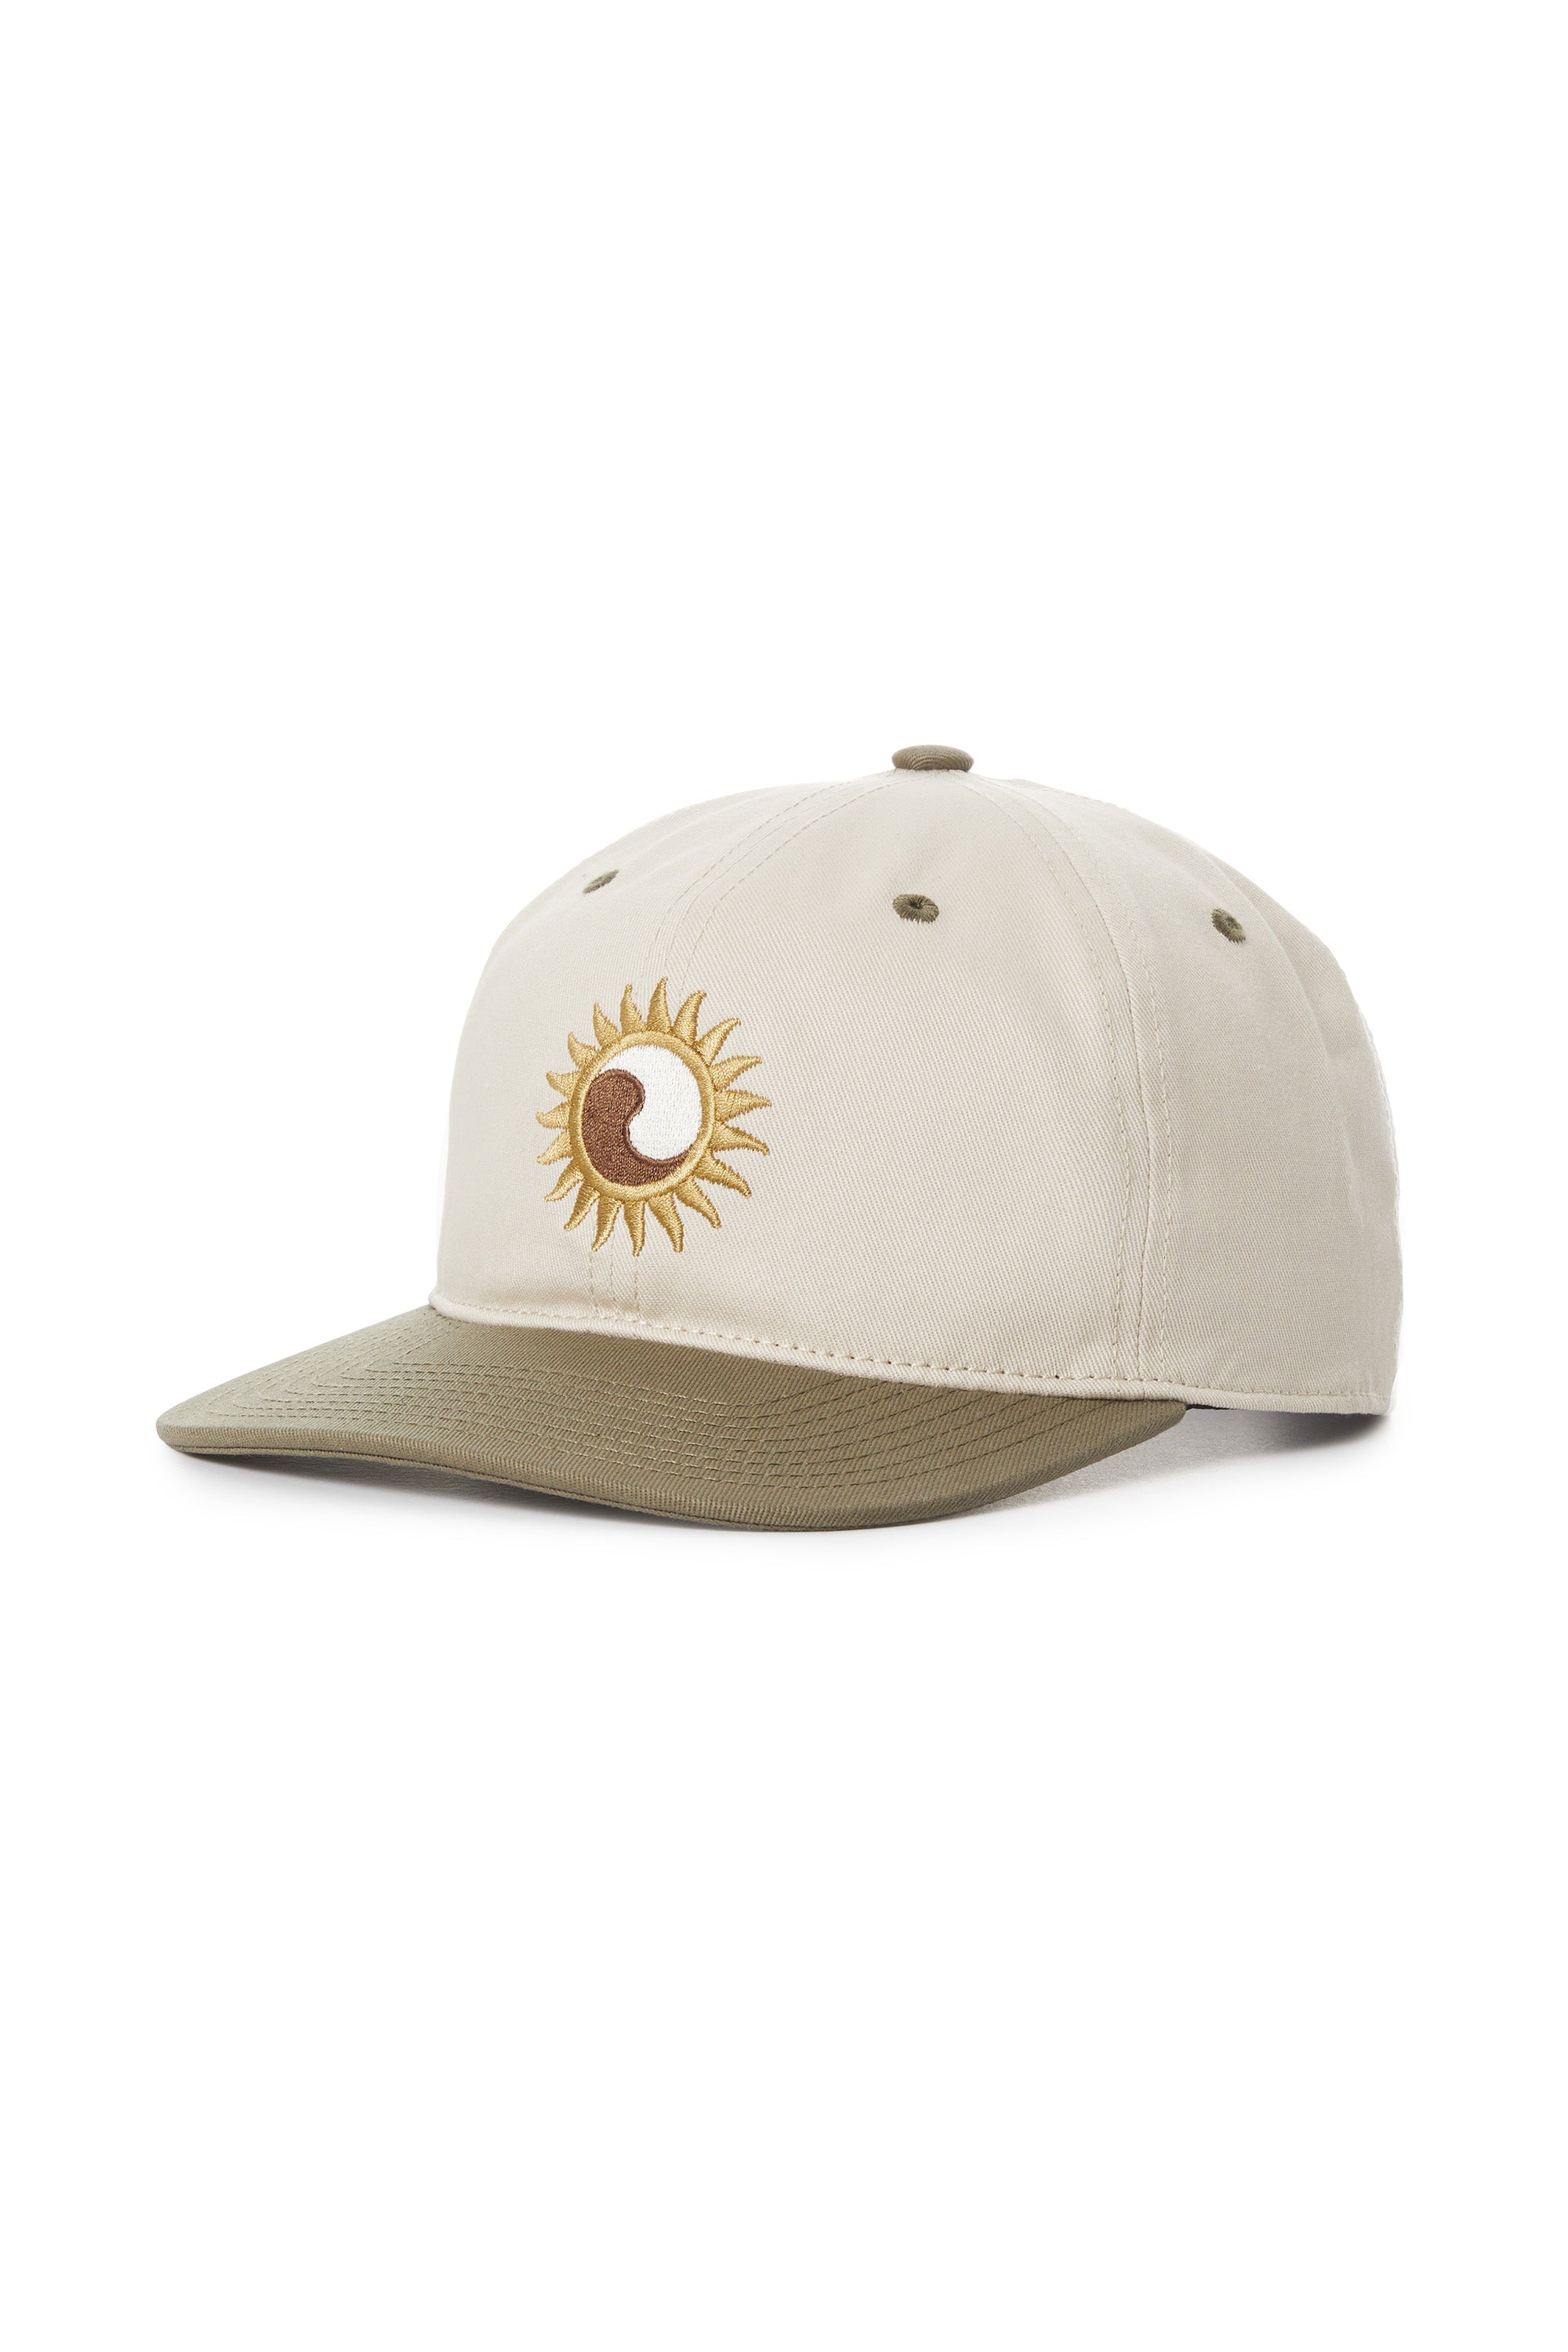 Sunfire Hat "Olive"